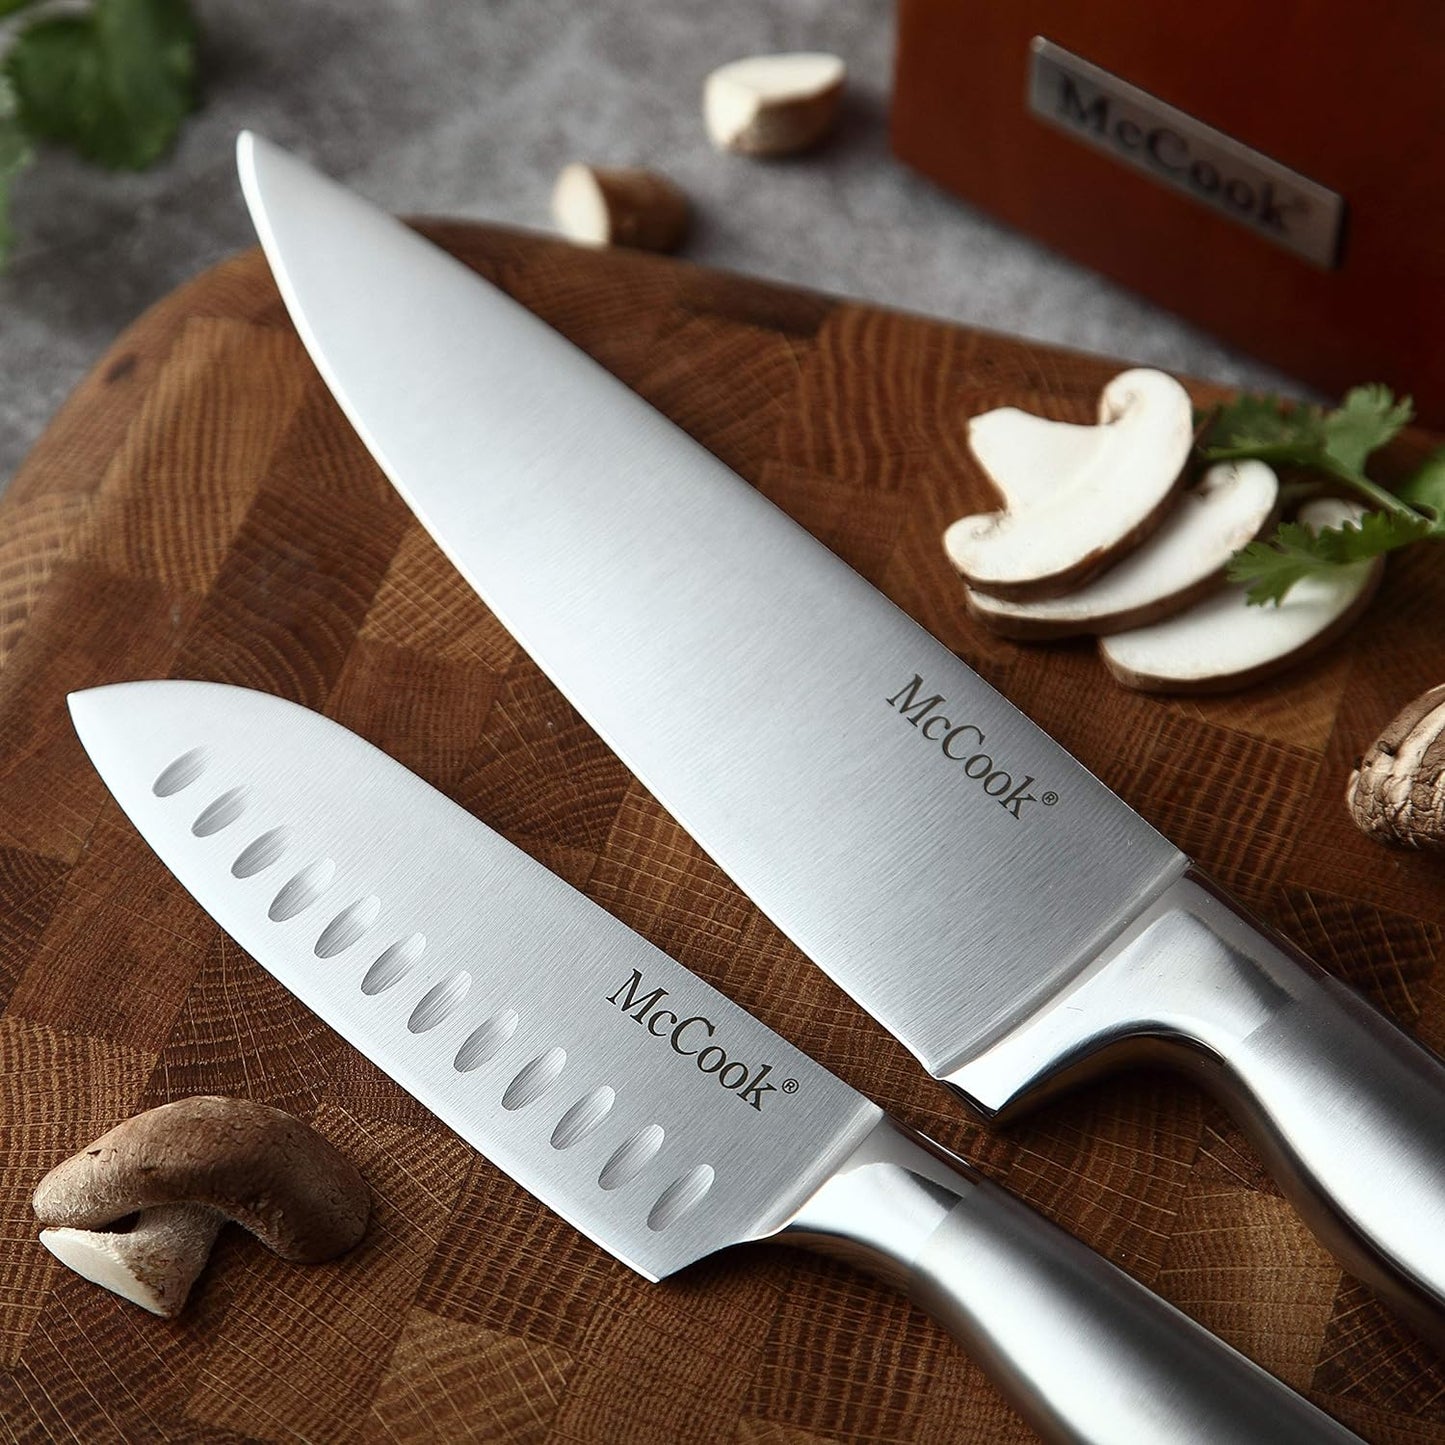 Knife Sets, German Stainless Steel Kitchen Knife Block Sets with Built-In Sharpener